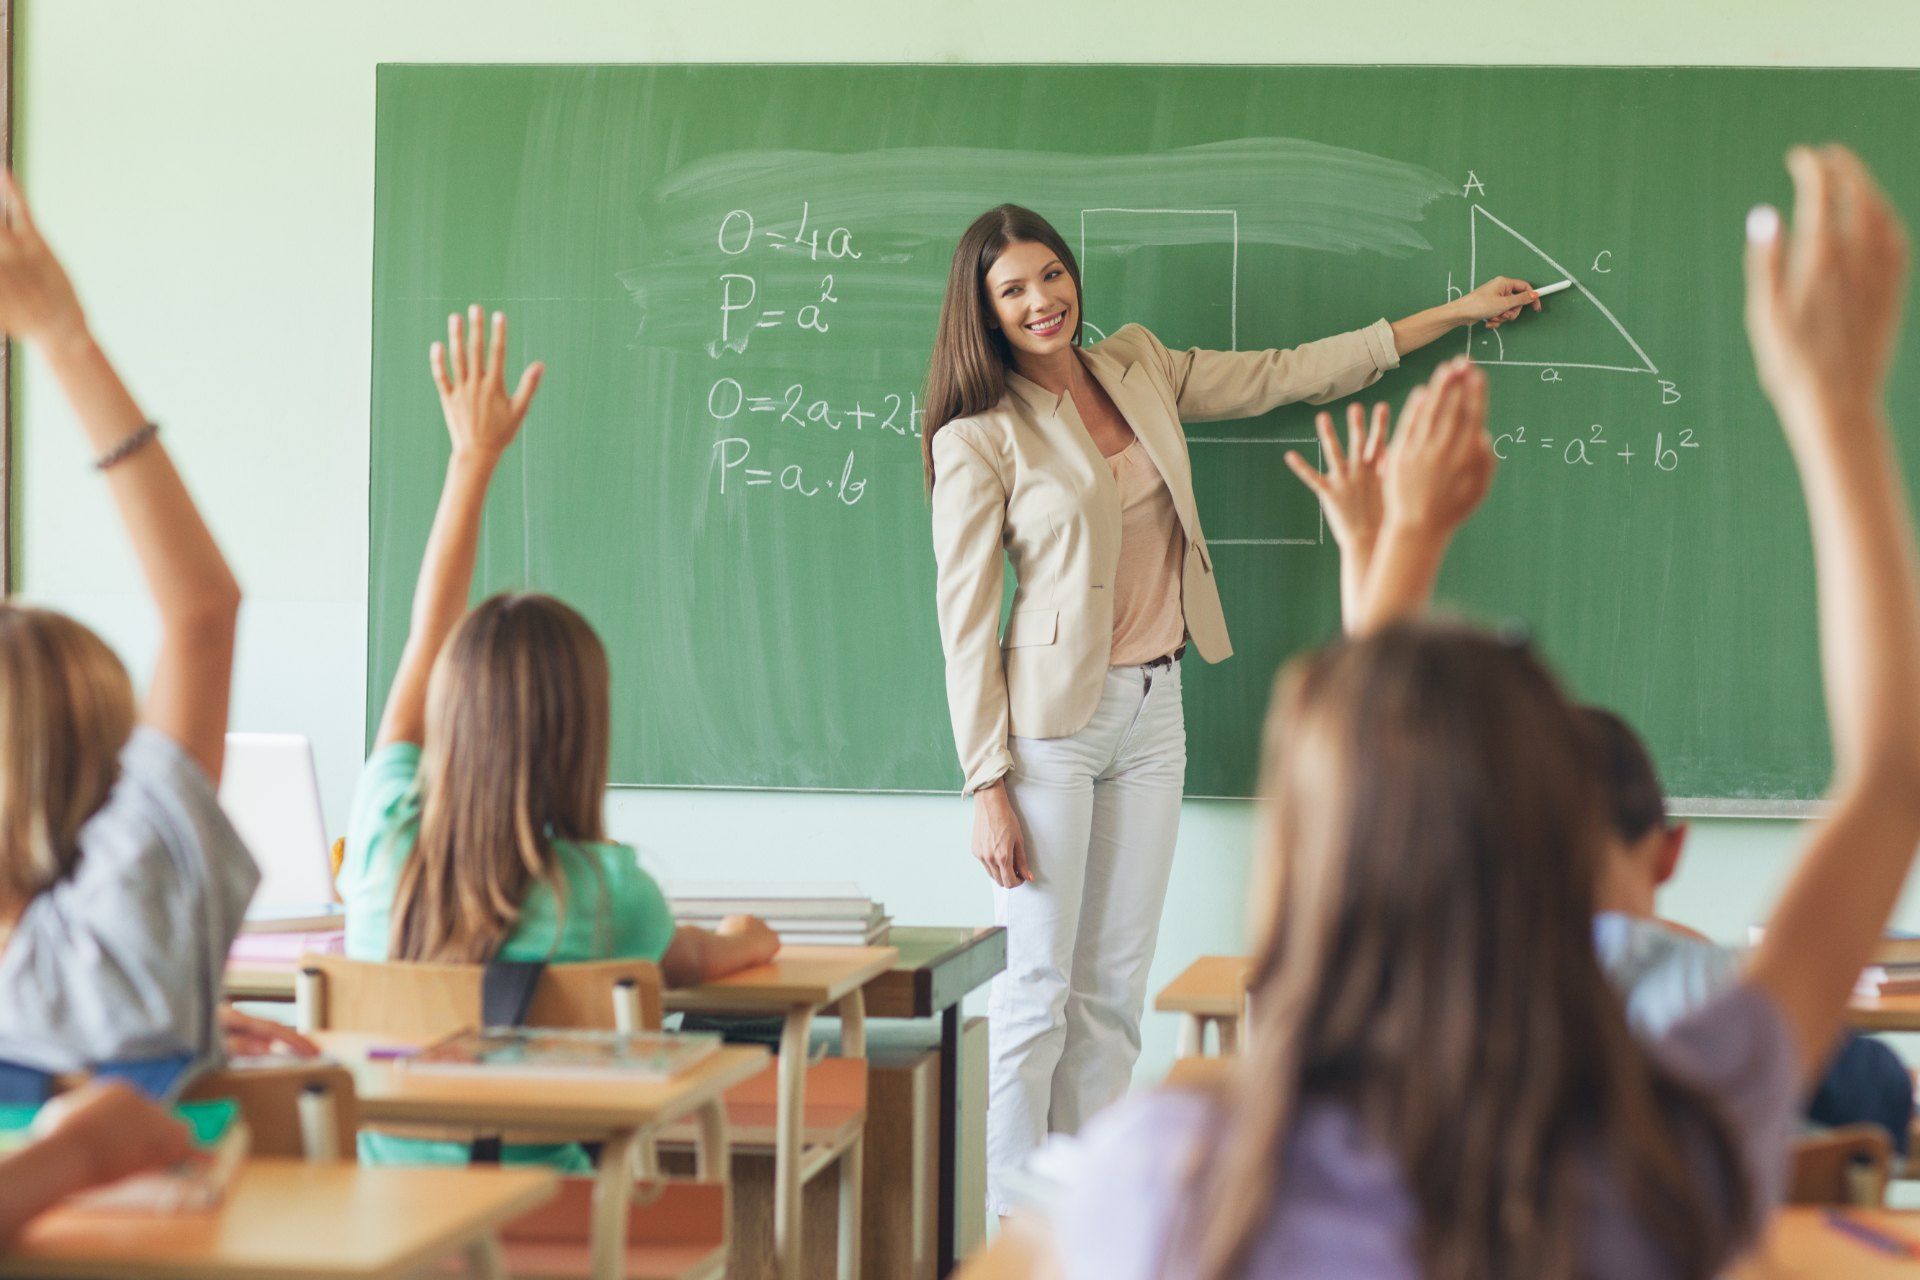 A female teacher teaches math at chalkboard as students raise hands - pay rises